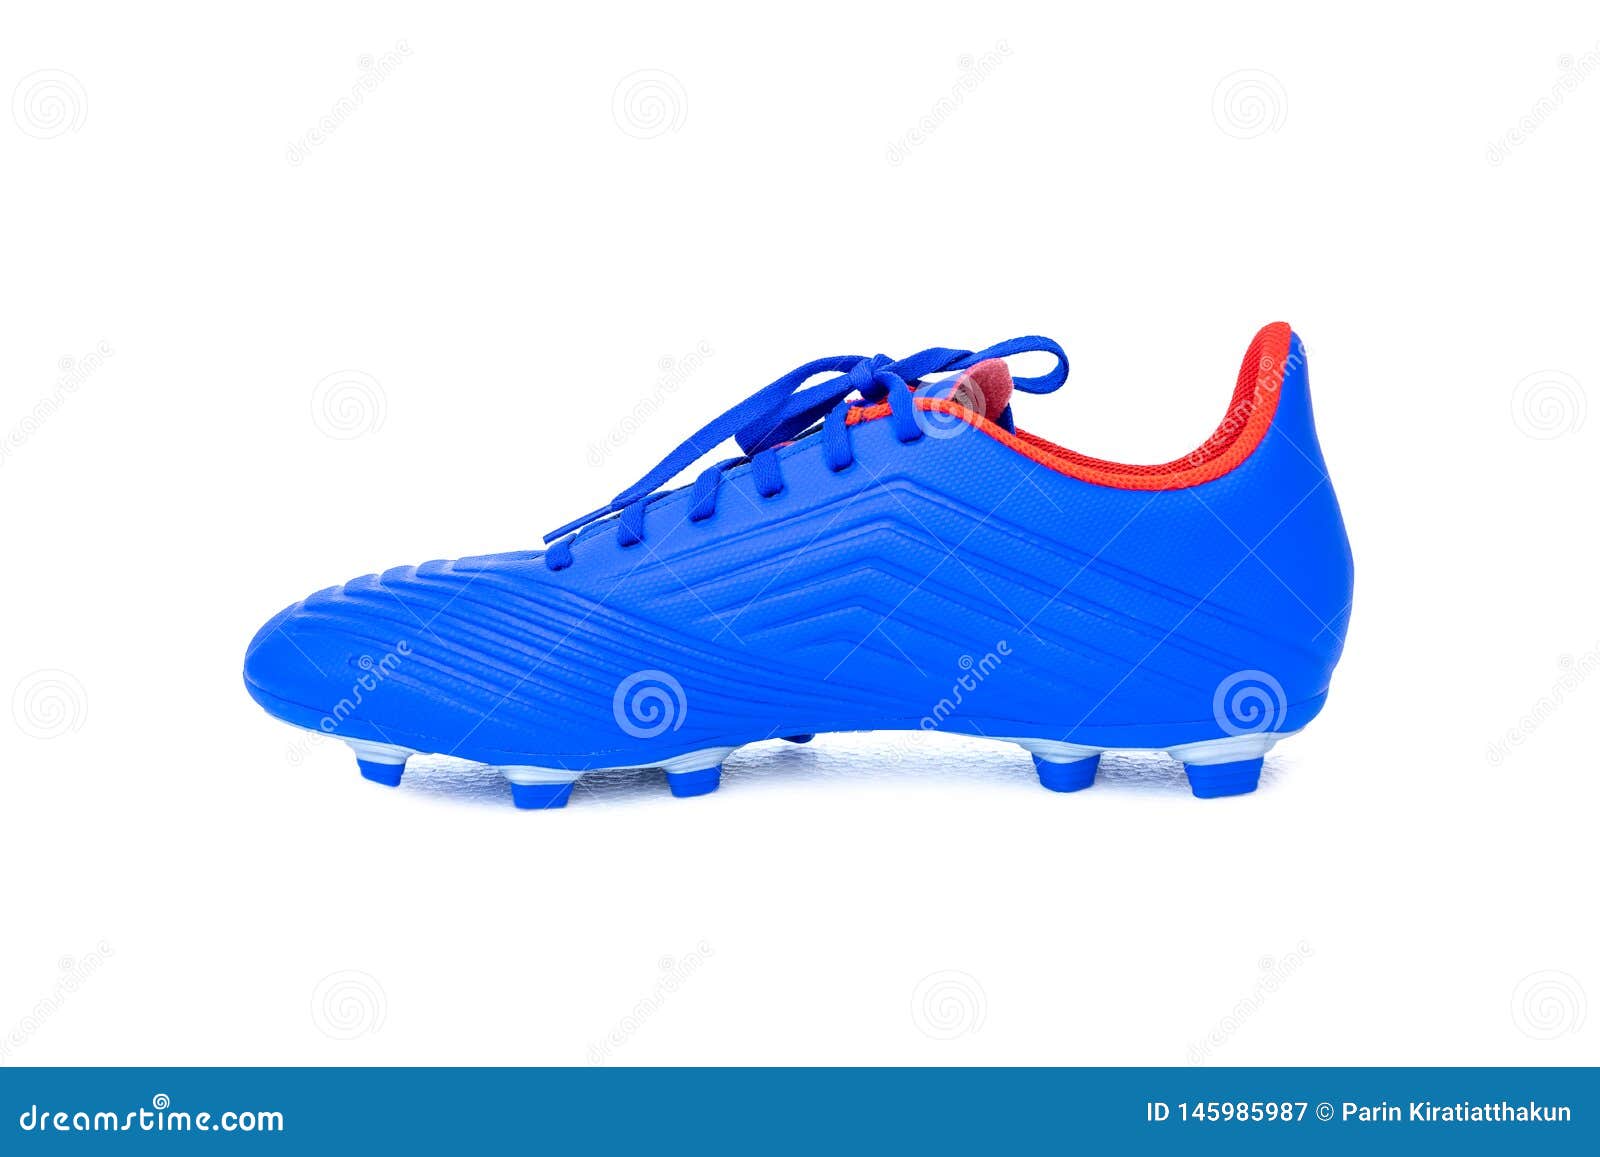 new adidas predator football boots